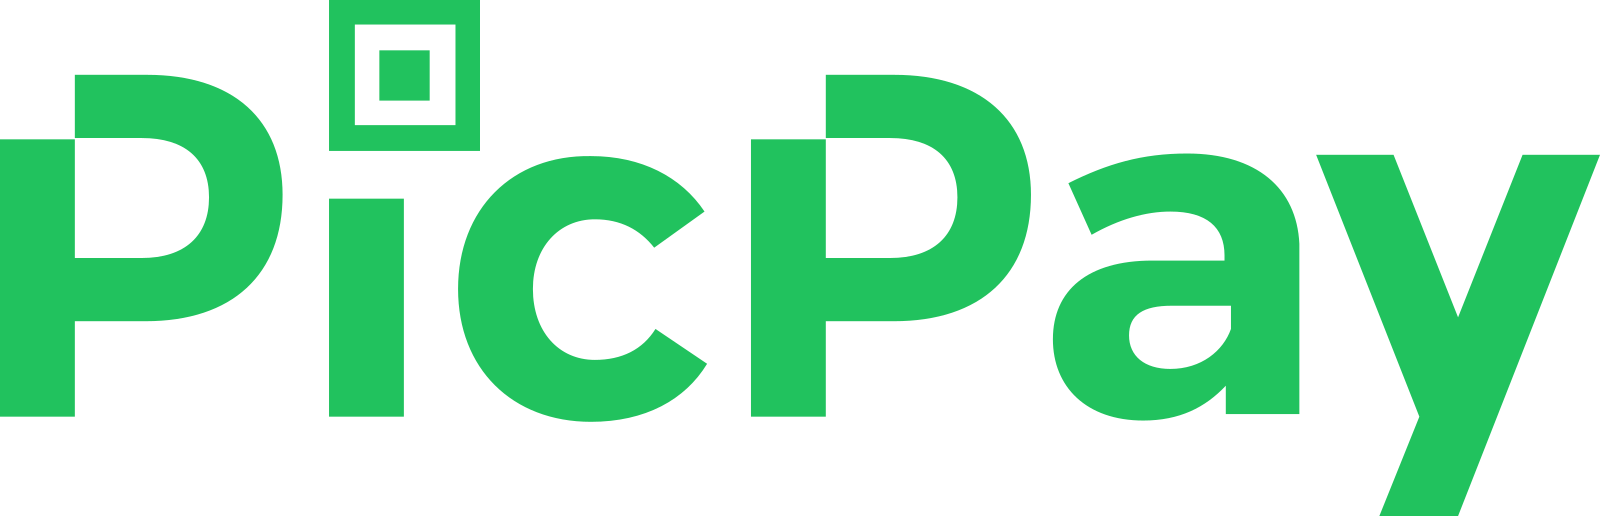 picpay-logo-4